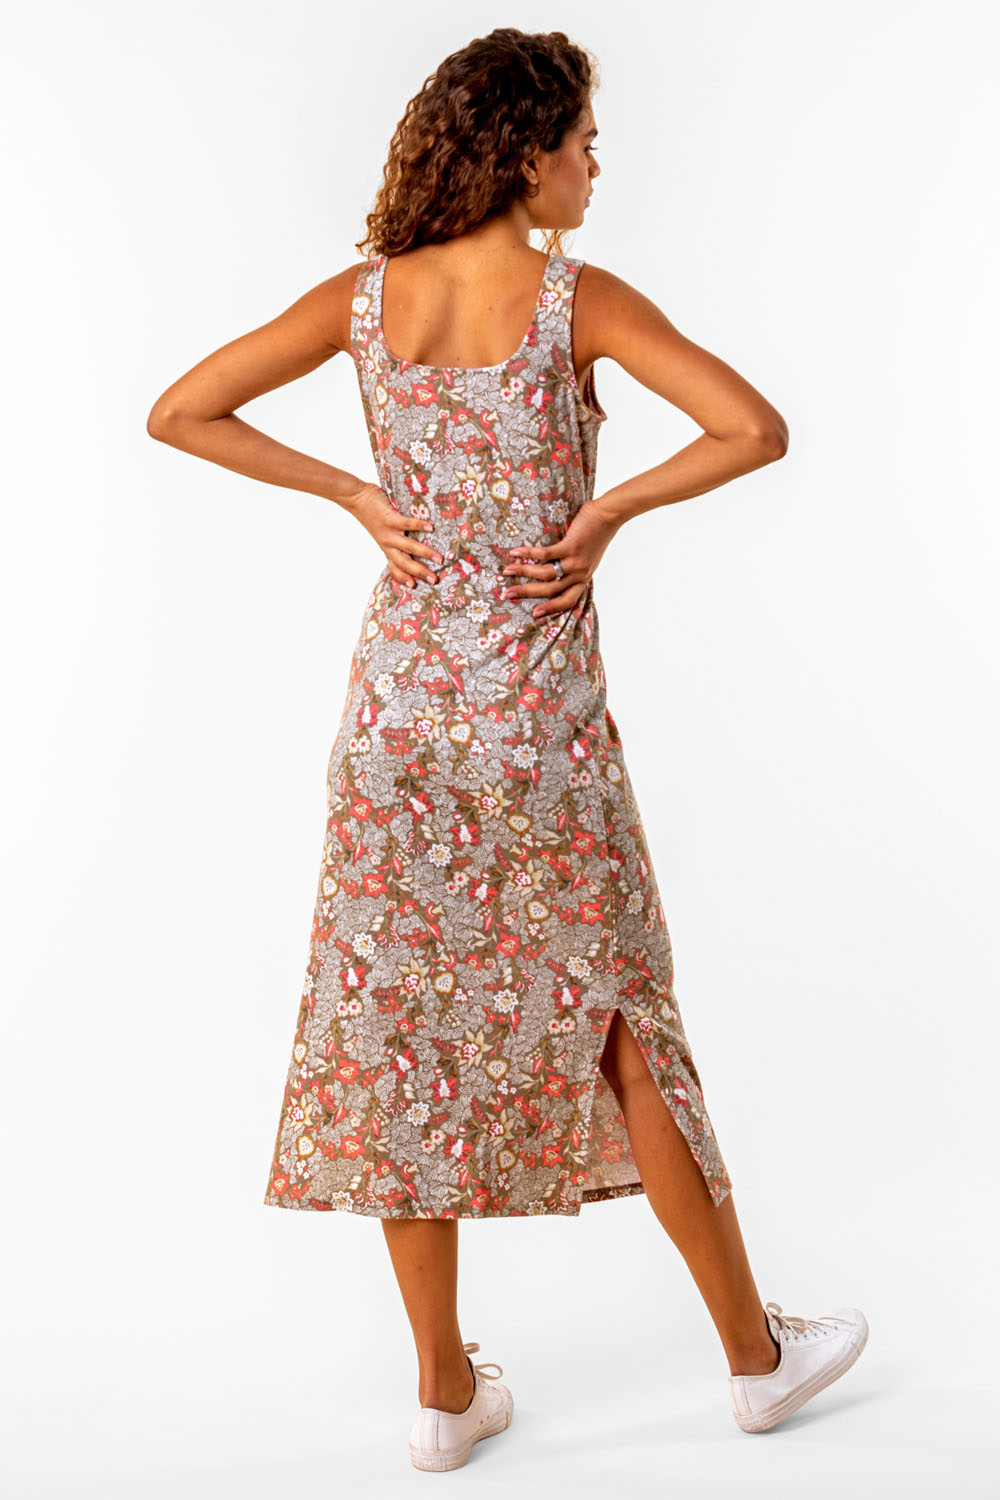 KHAKI Floral Print Jersey Maxi Dress, Image 2 of 4